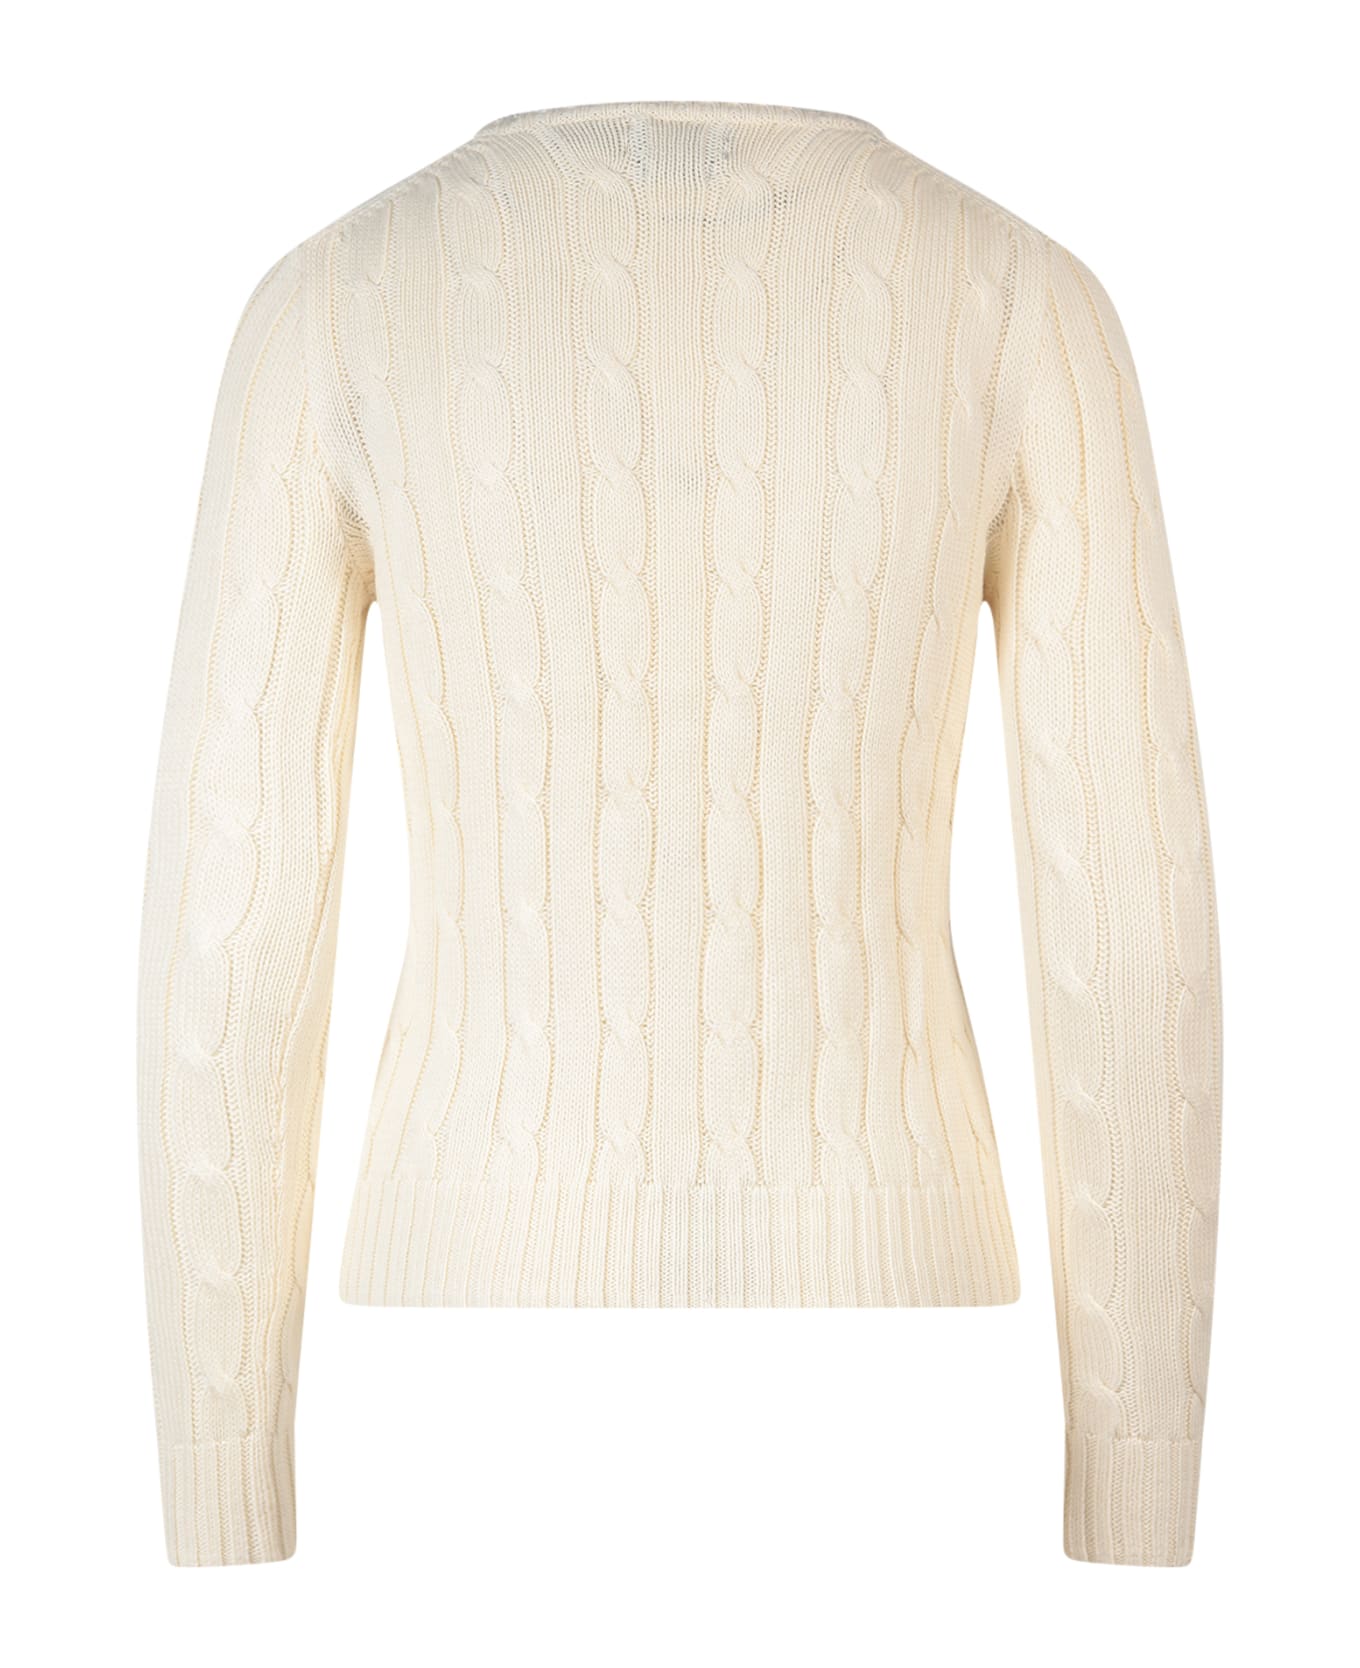 Ralph Lauren Sweater - Cream ニットウェア